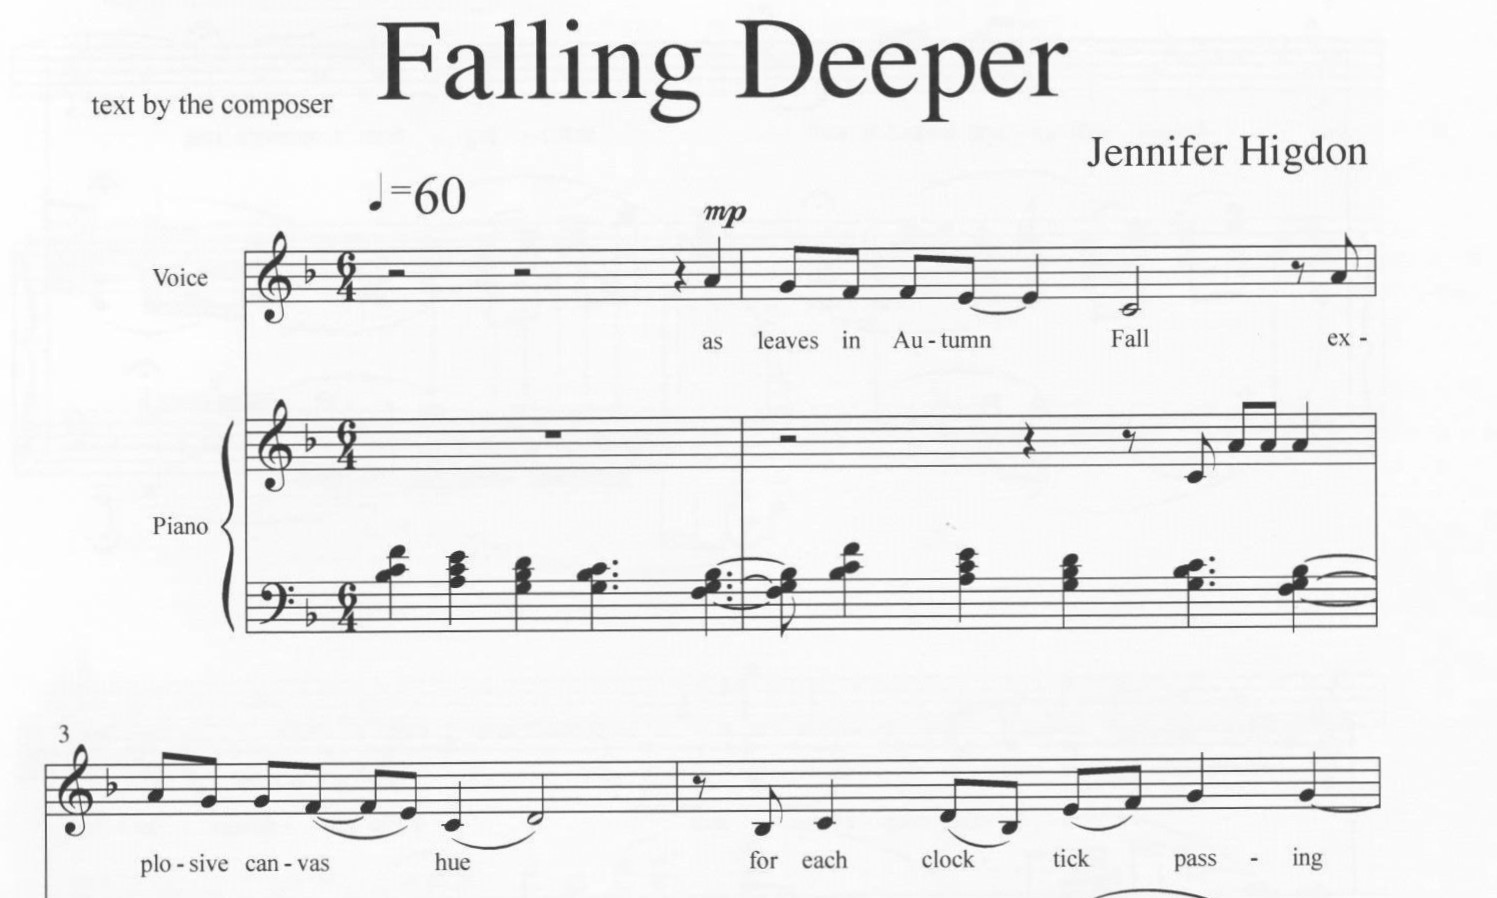 Falling Deeper - Jennifer Higdon